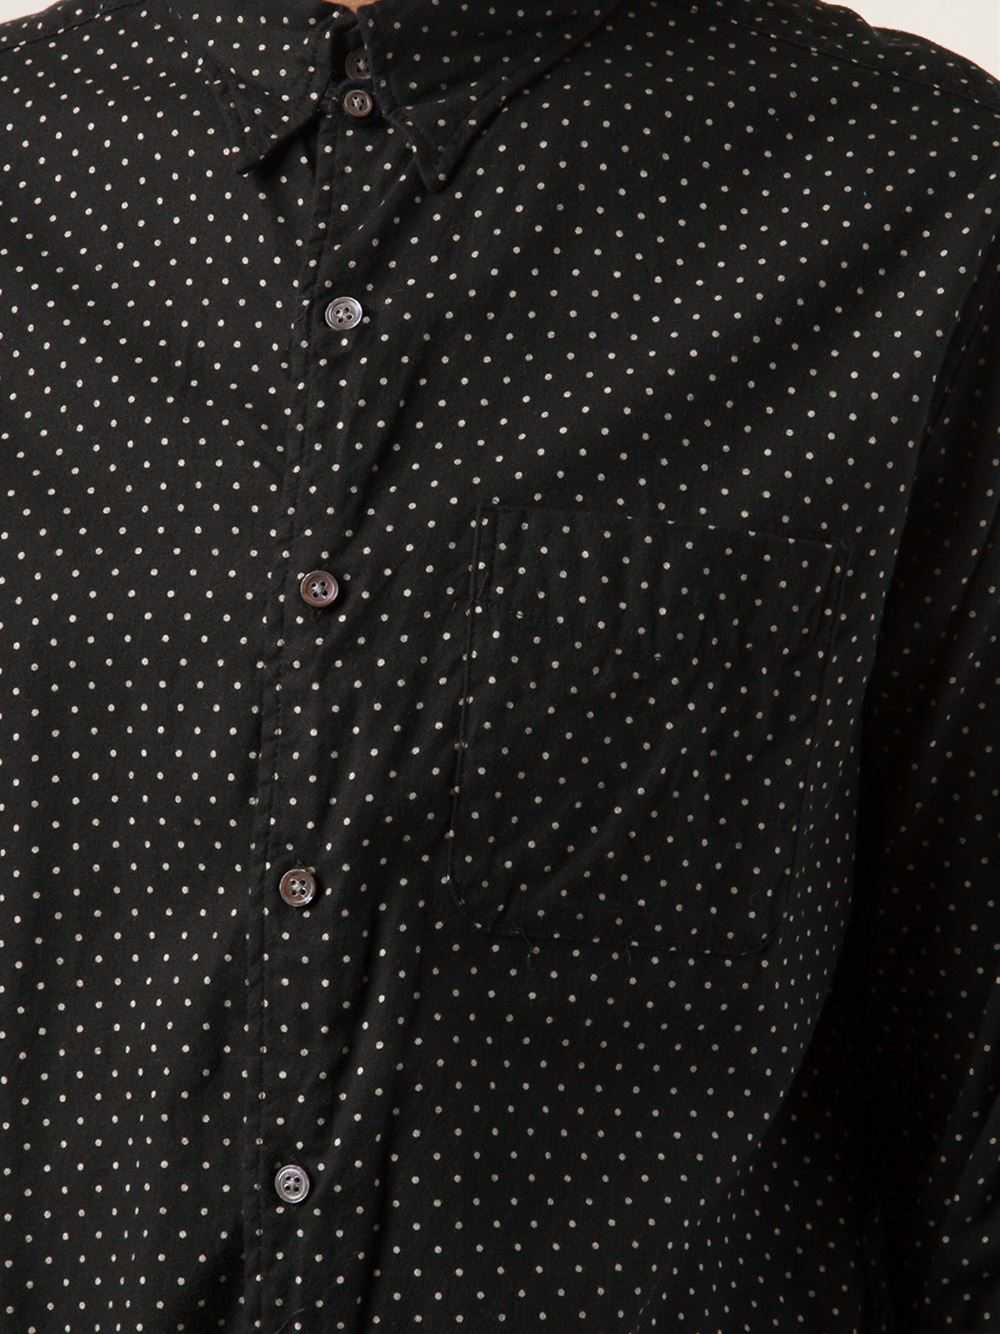 Lyst - Engineered Garments Shirt in Black for Men